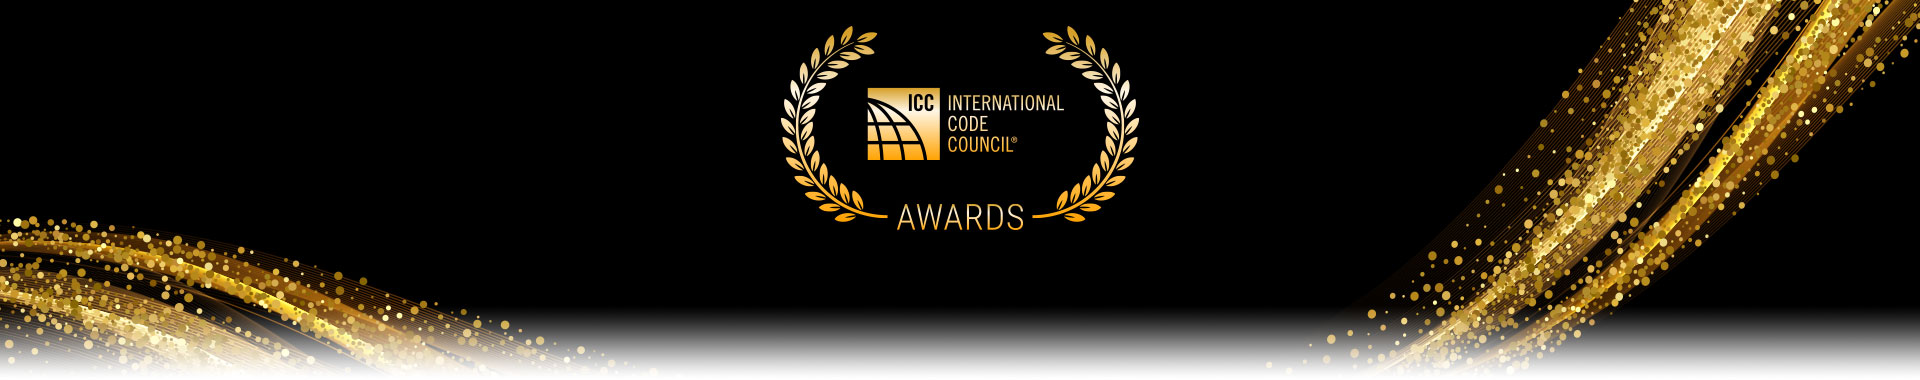 Gerald H. Jones Code Official of the Year Award